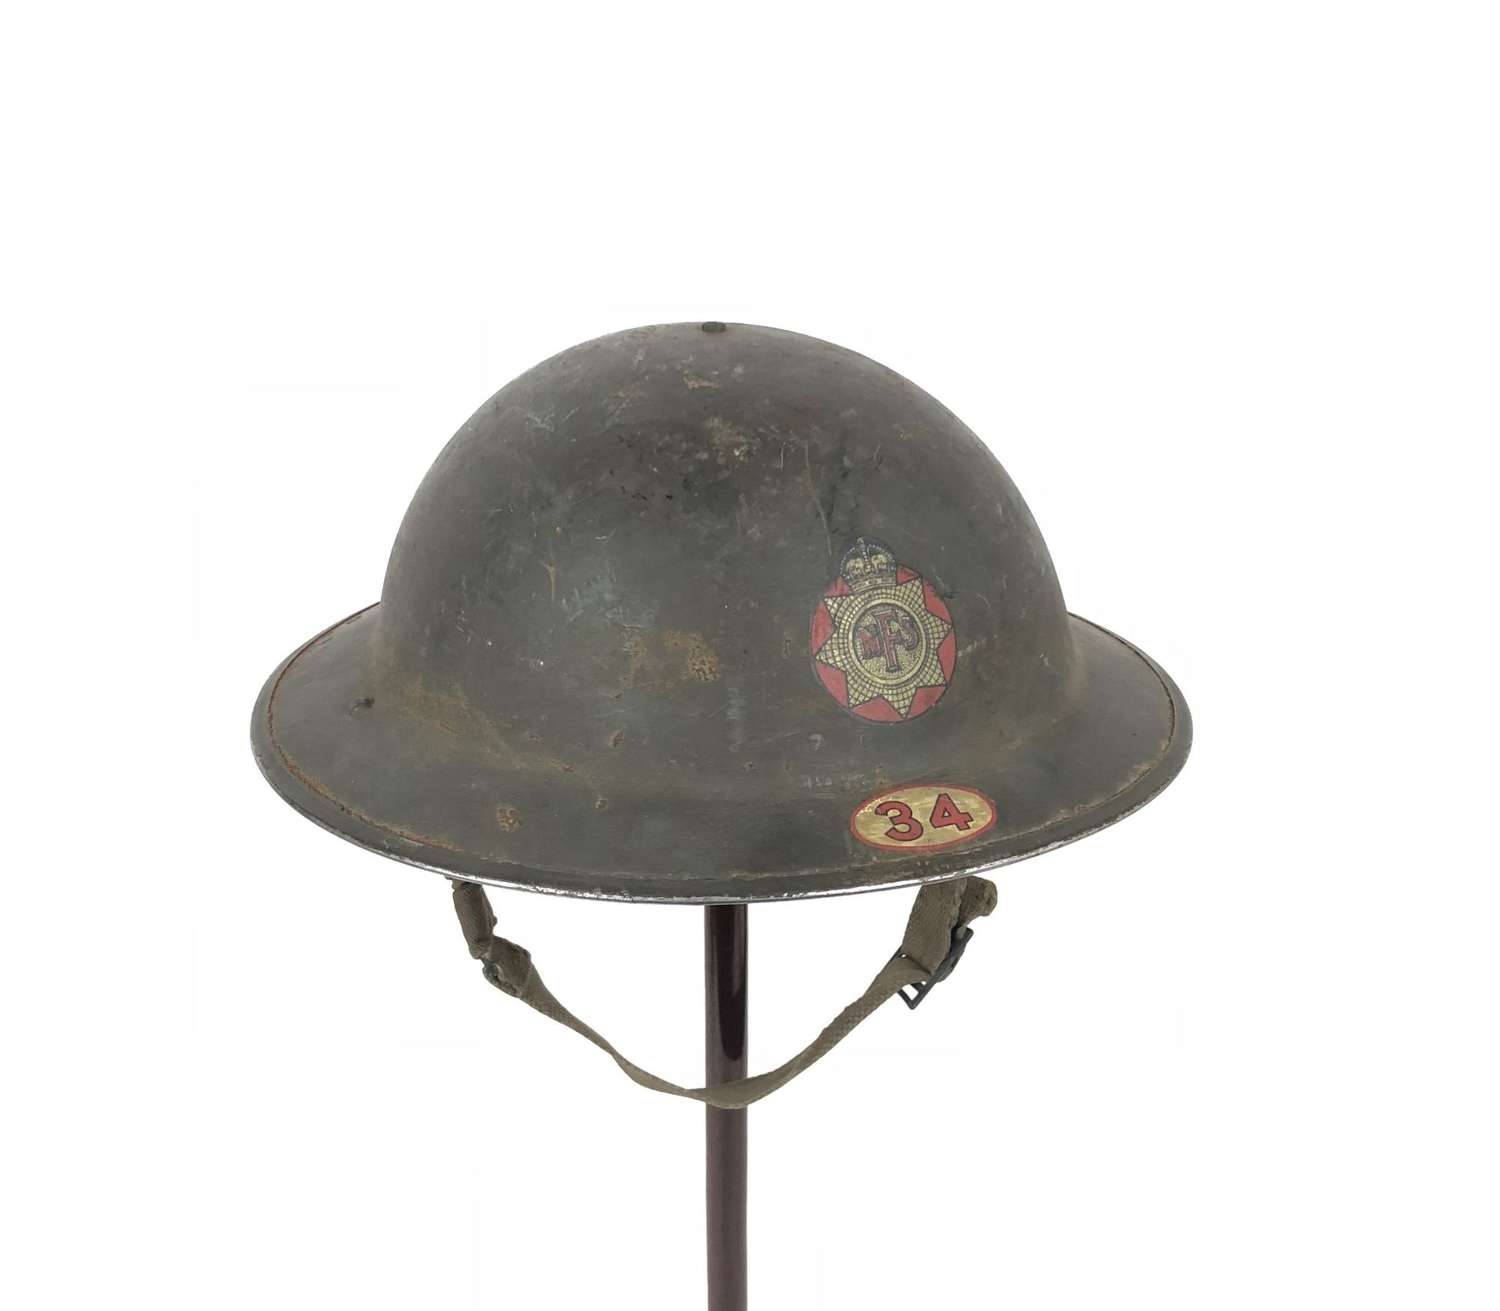 WW2 National Fire Service Ealing London Blitz Period Helmet.